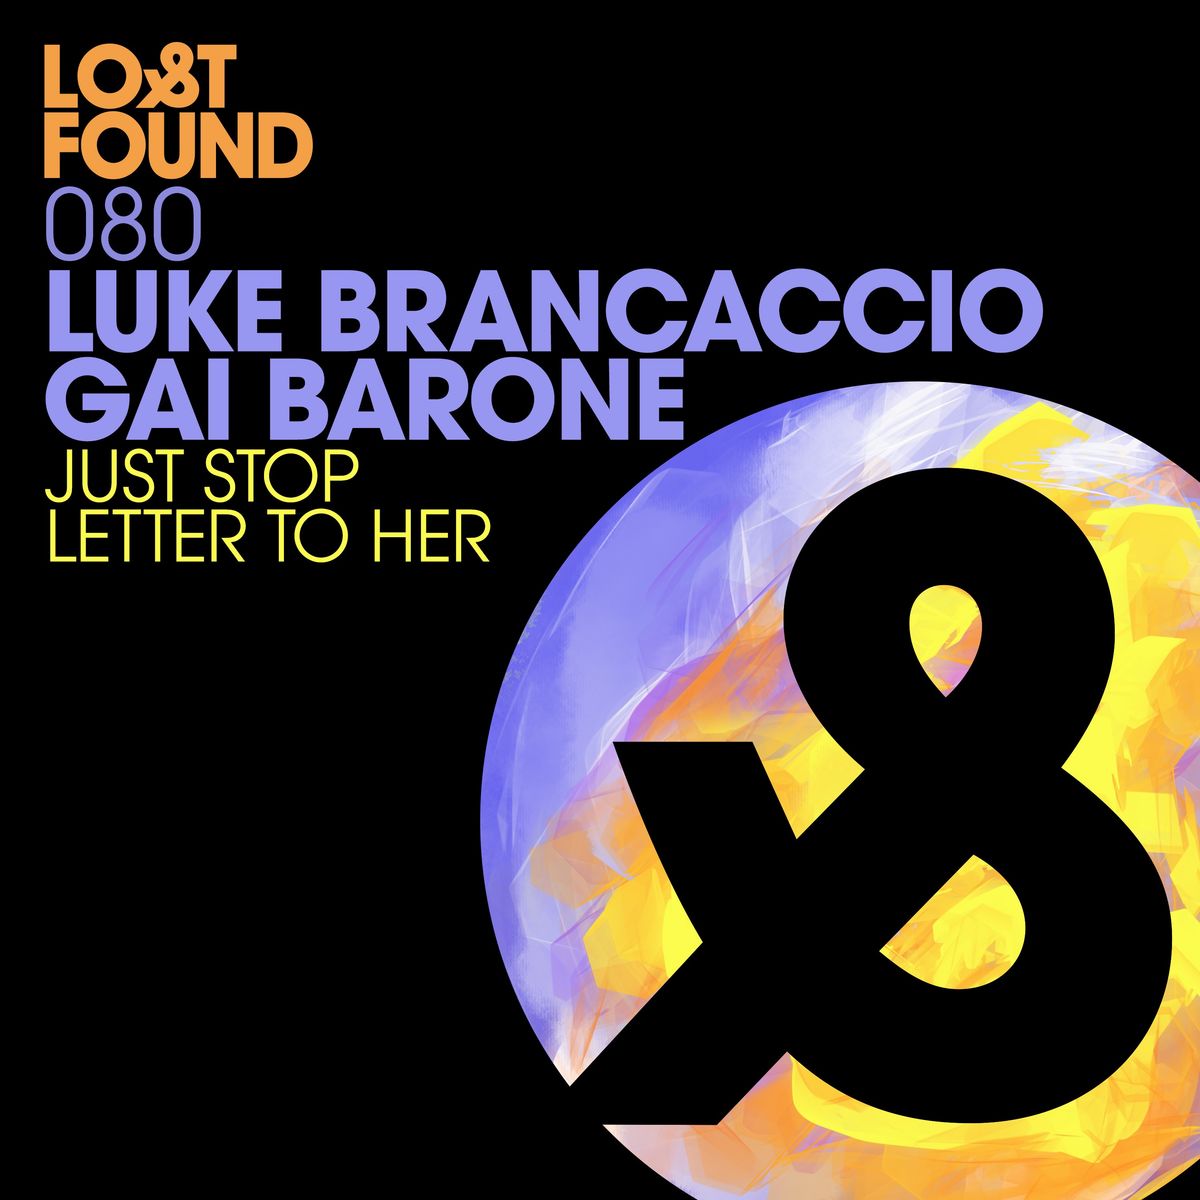 Luke Brancaccio & Gai Barone - Just Stop - Letter to Her [LF080D]